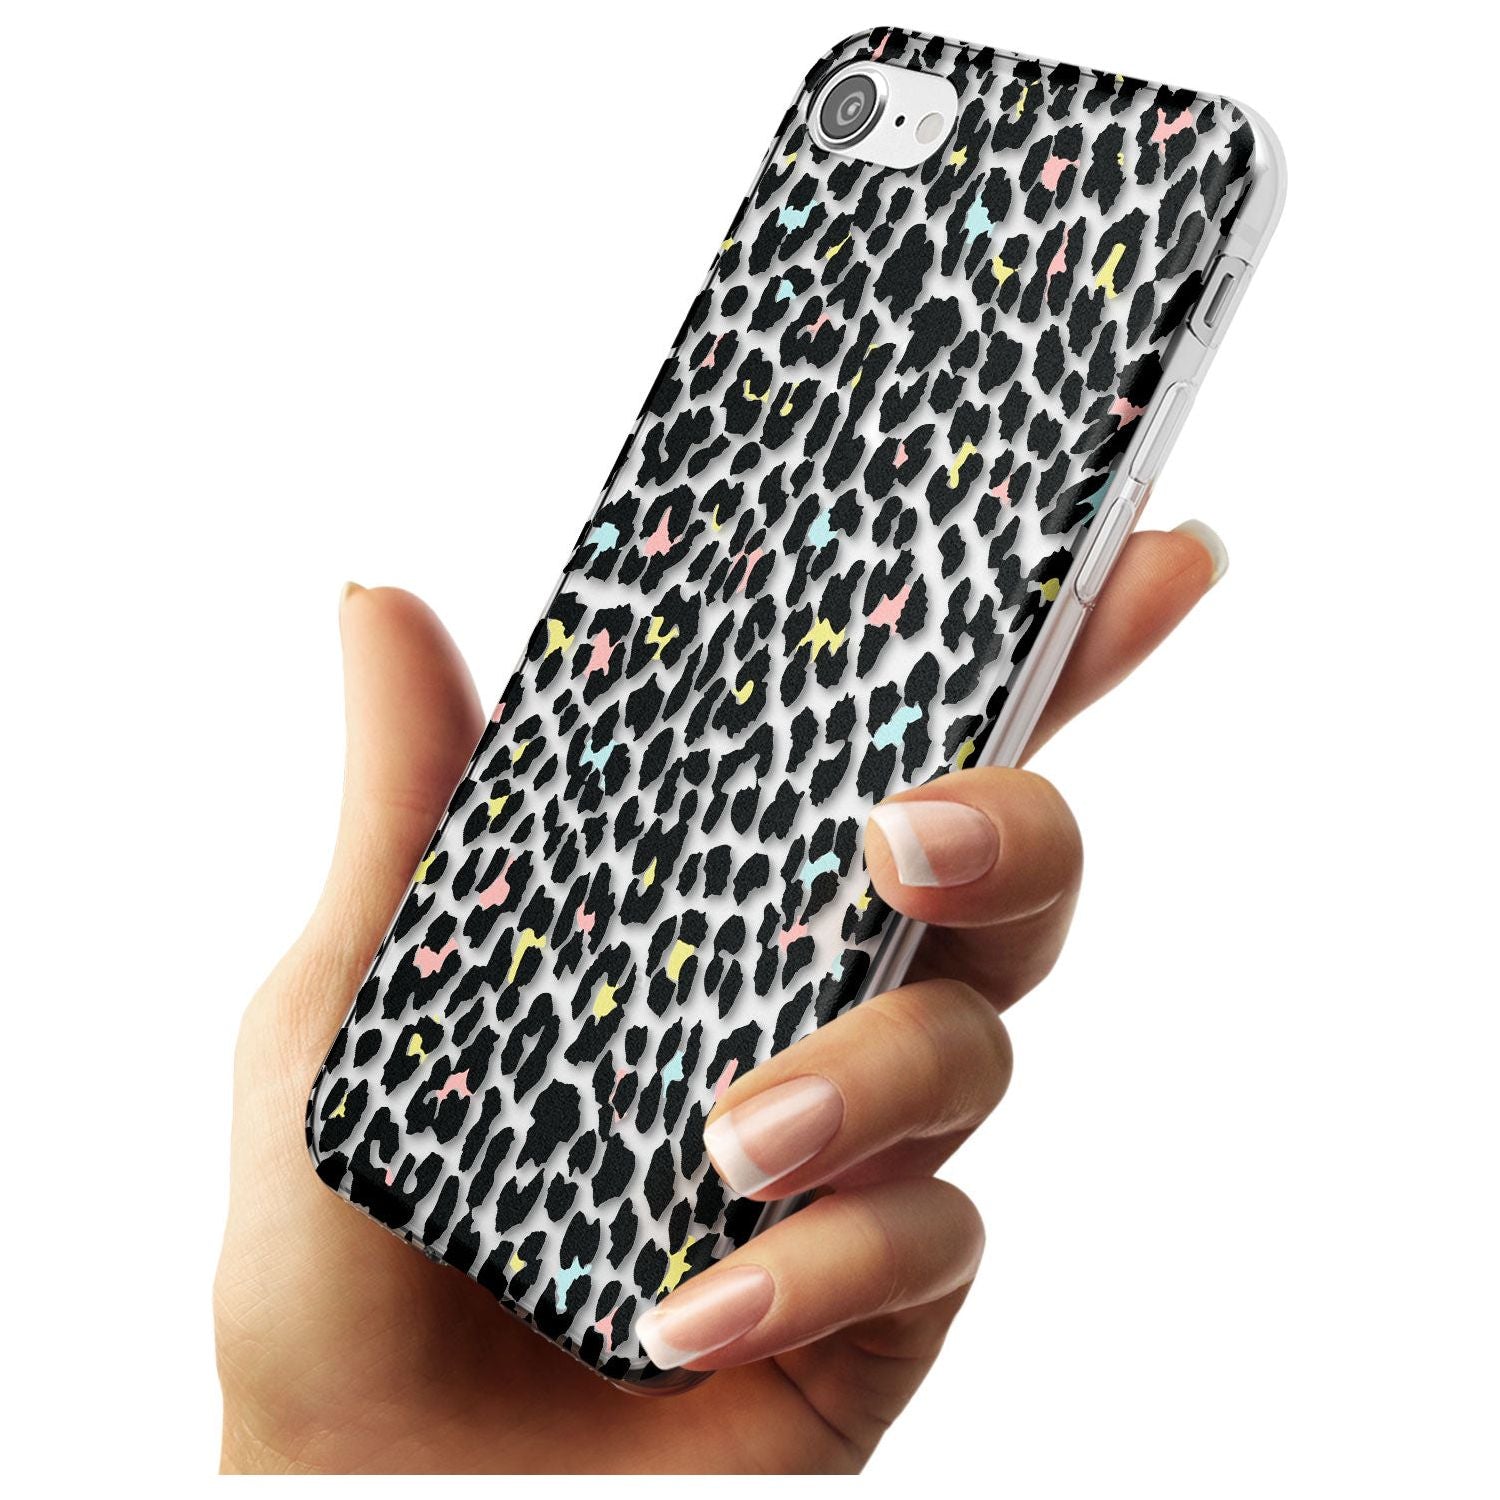 Mixed Pastels Leopard Print - Transparent Slim TPU Phone Case for iPhone SE 8 7 Plus